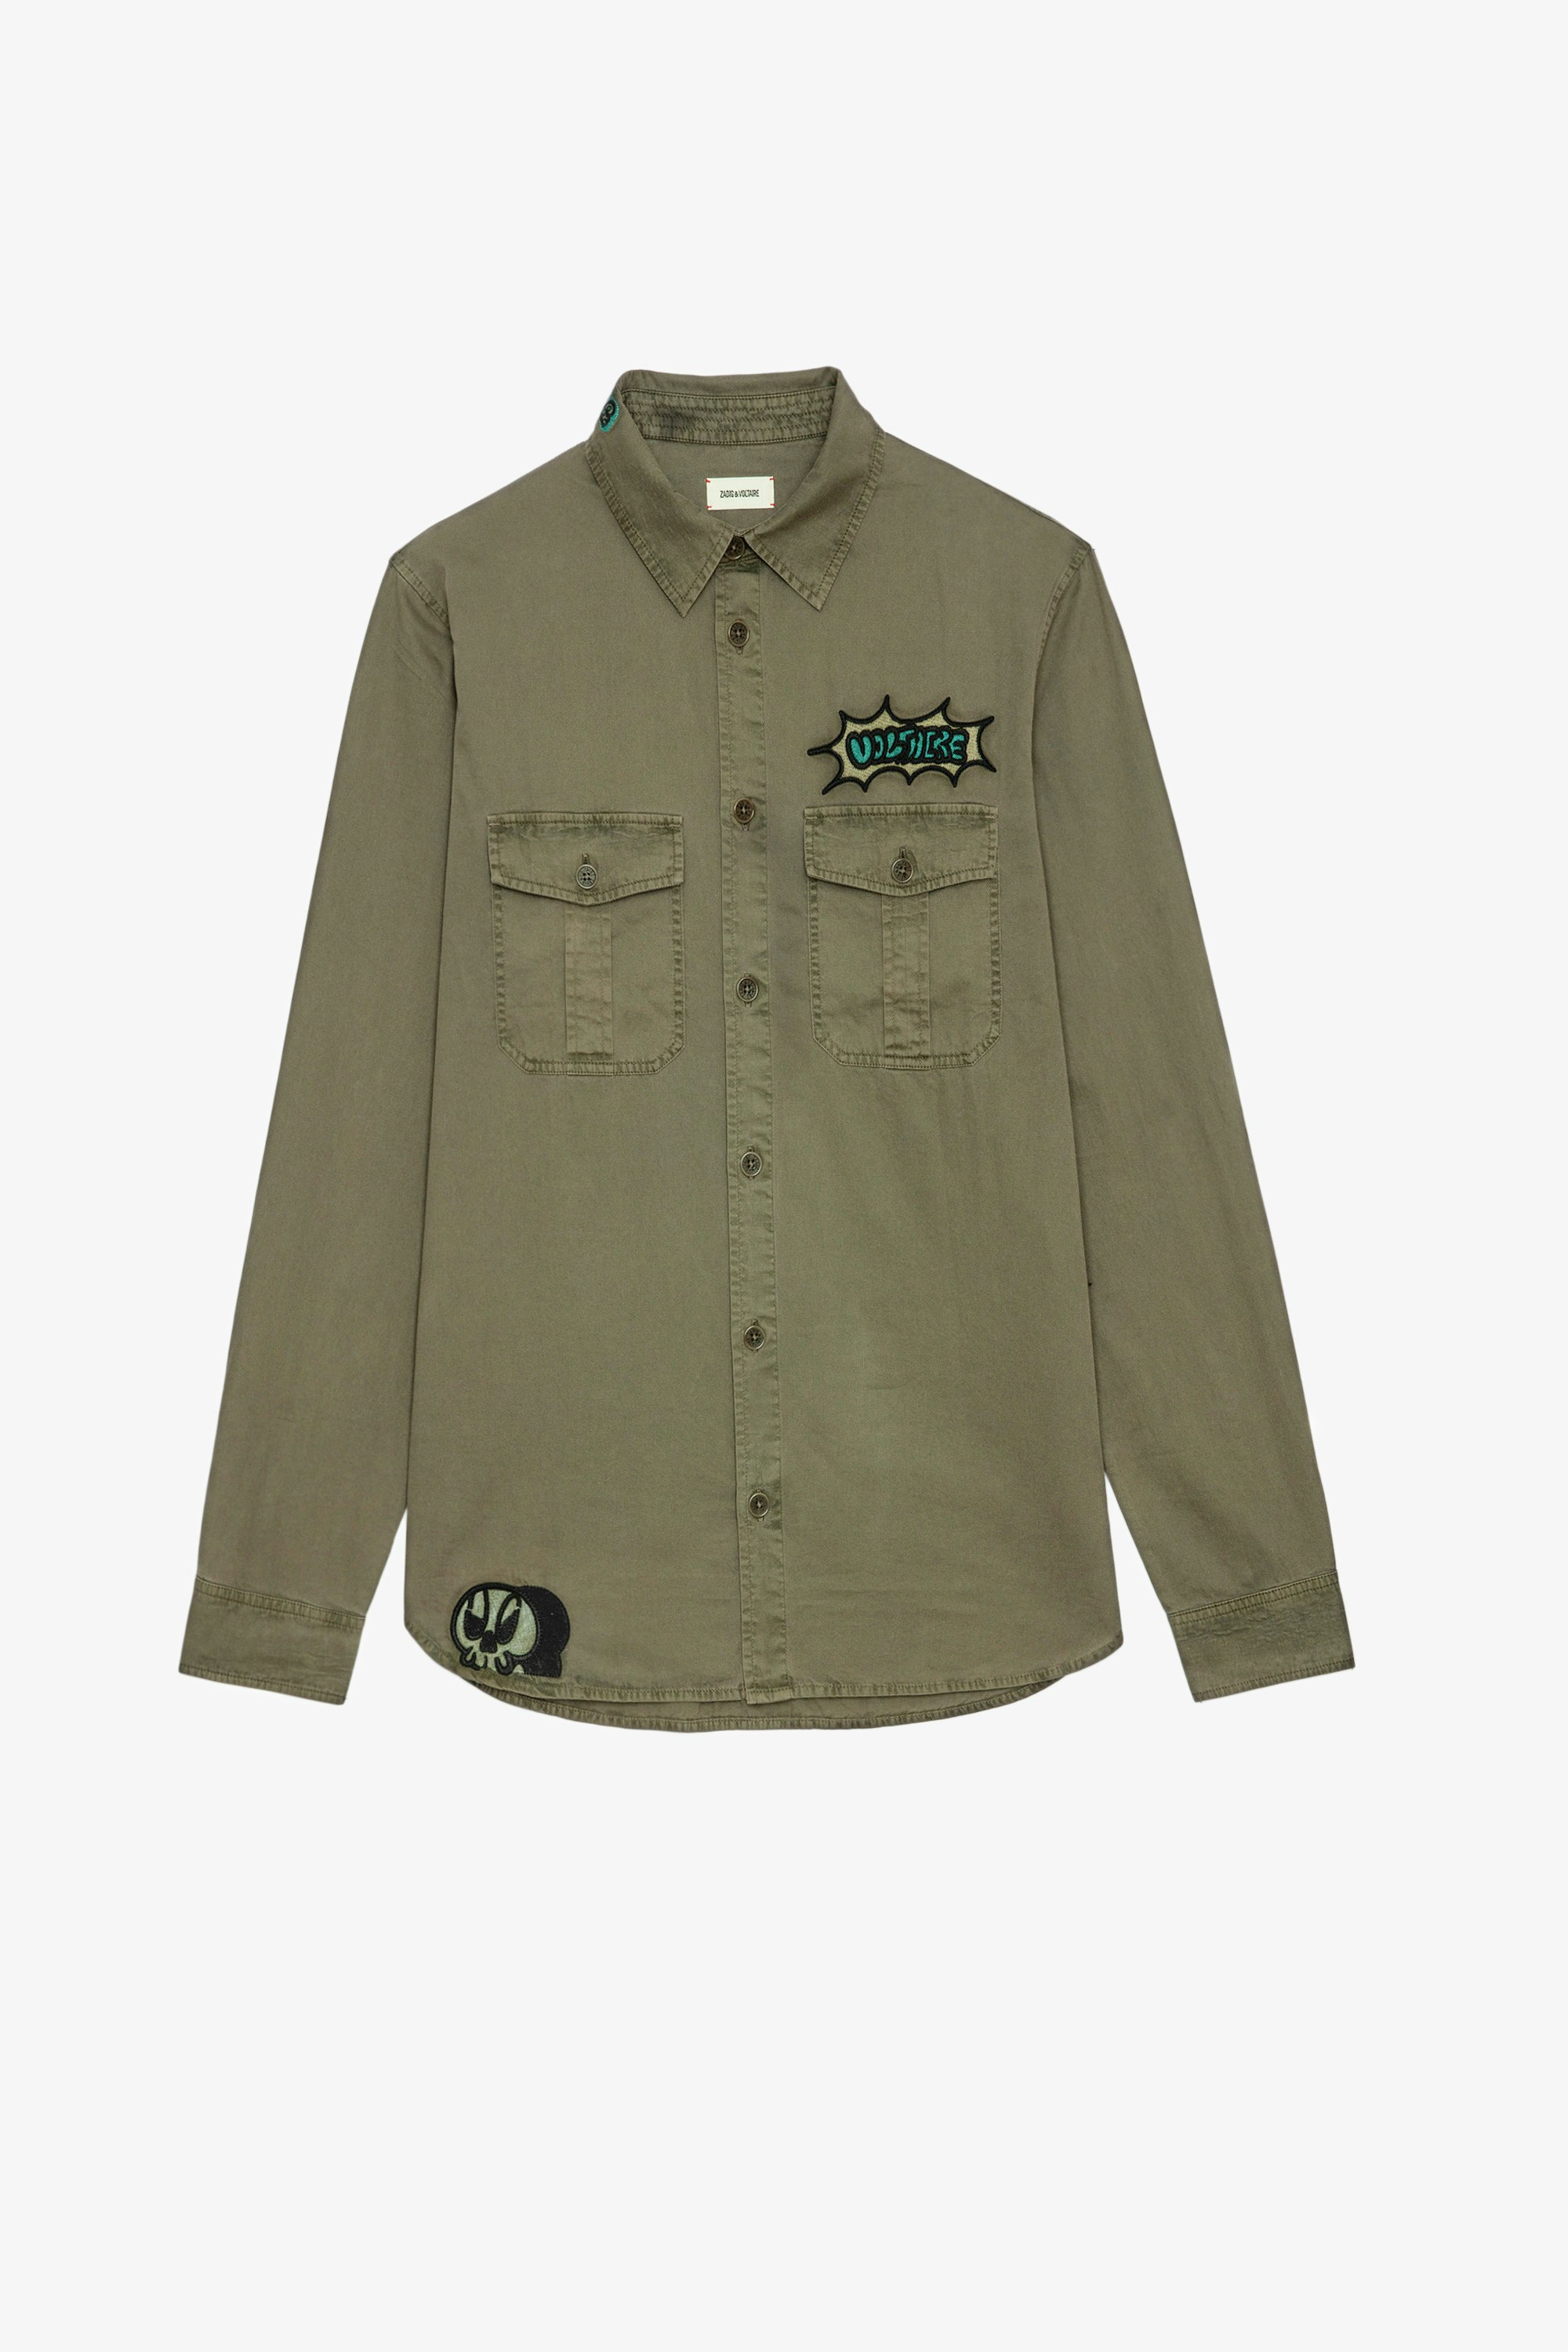 Stan Shirt Men’s khaki cotton military-style shirt with appliqué on back